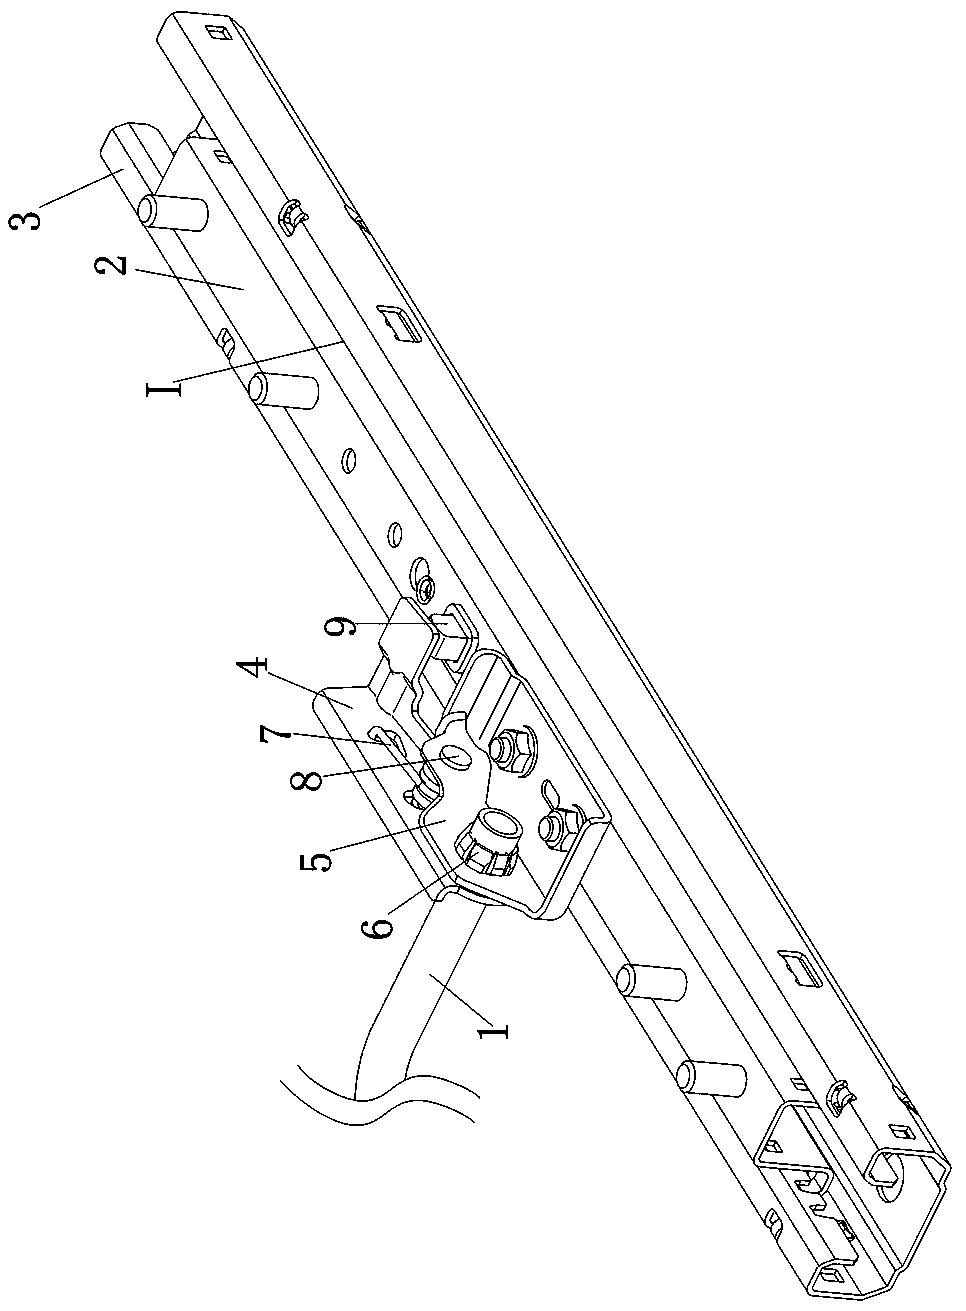 Method for installing and unlocking locking mechanism in sliding rail of car seat